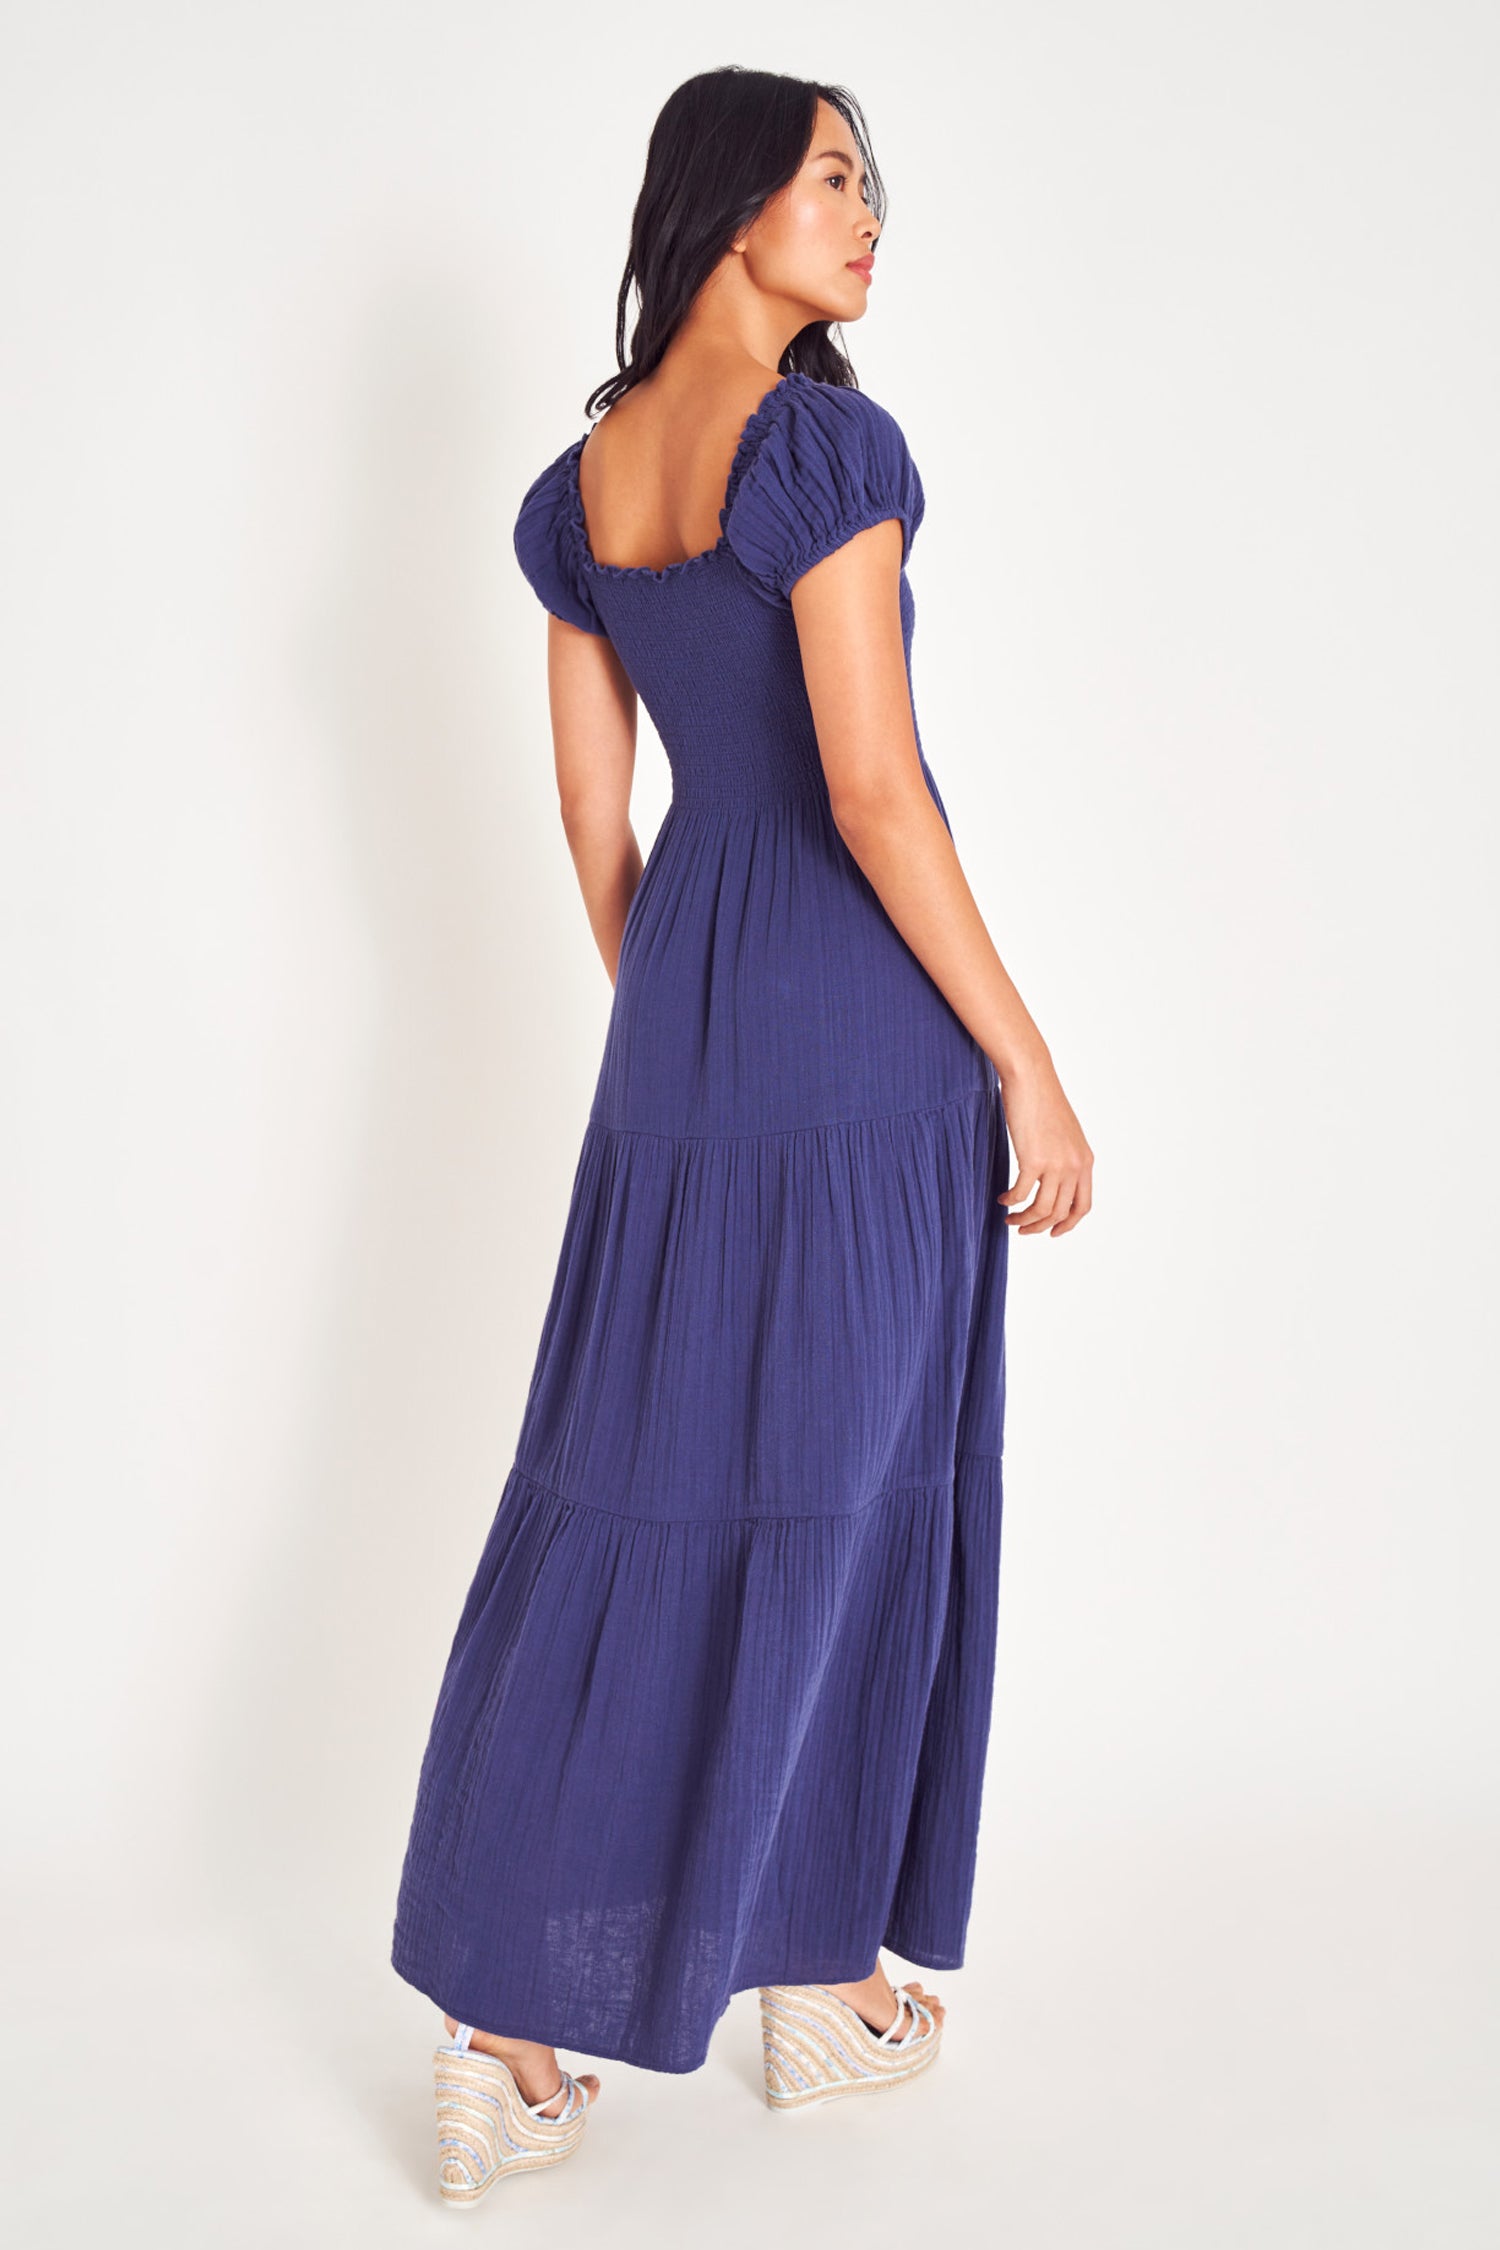 Short sleeved navy blue maxi dress with side slit.